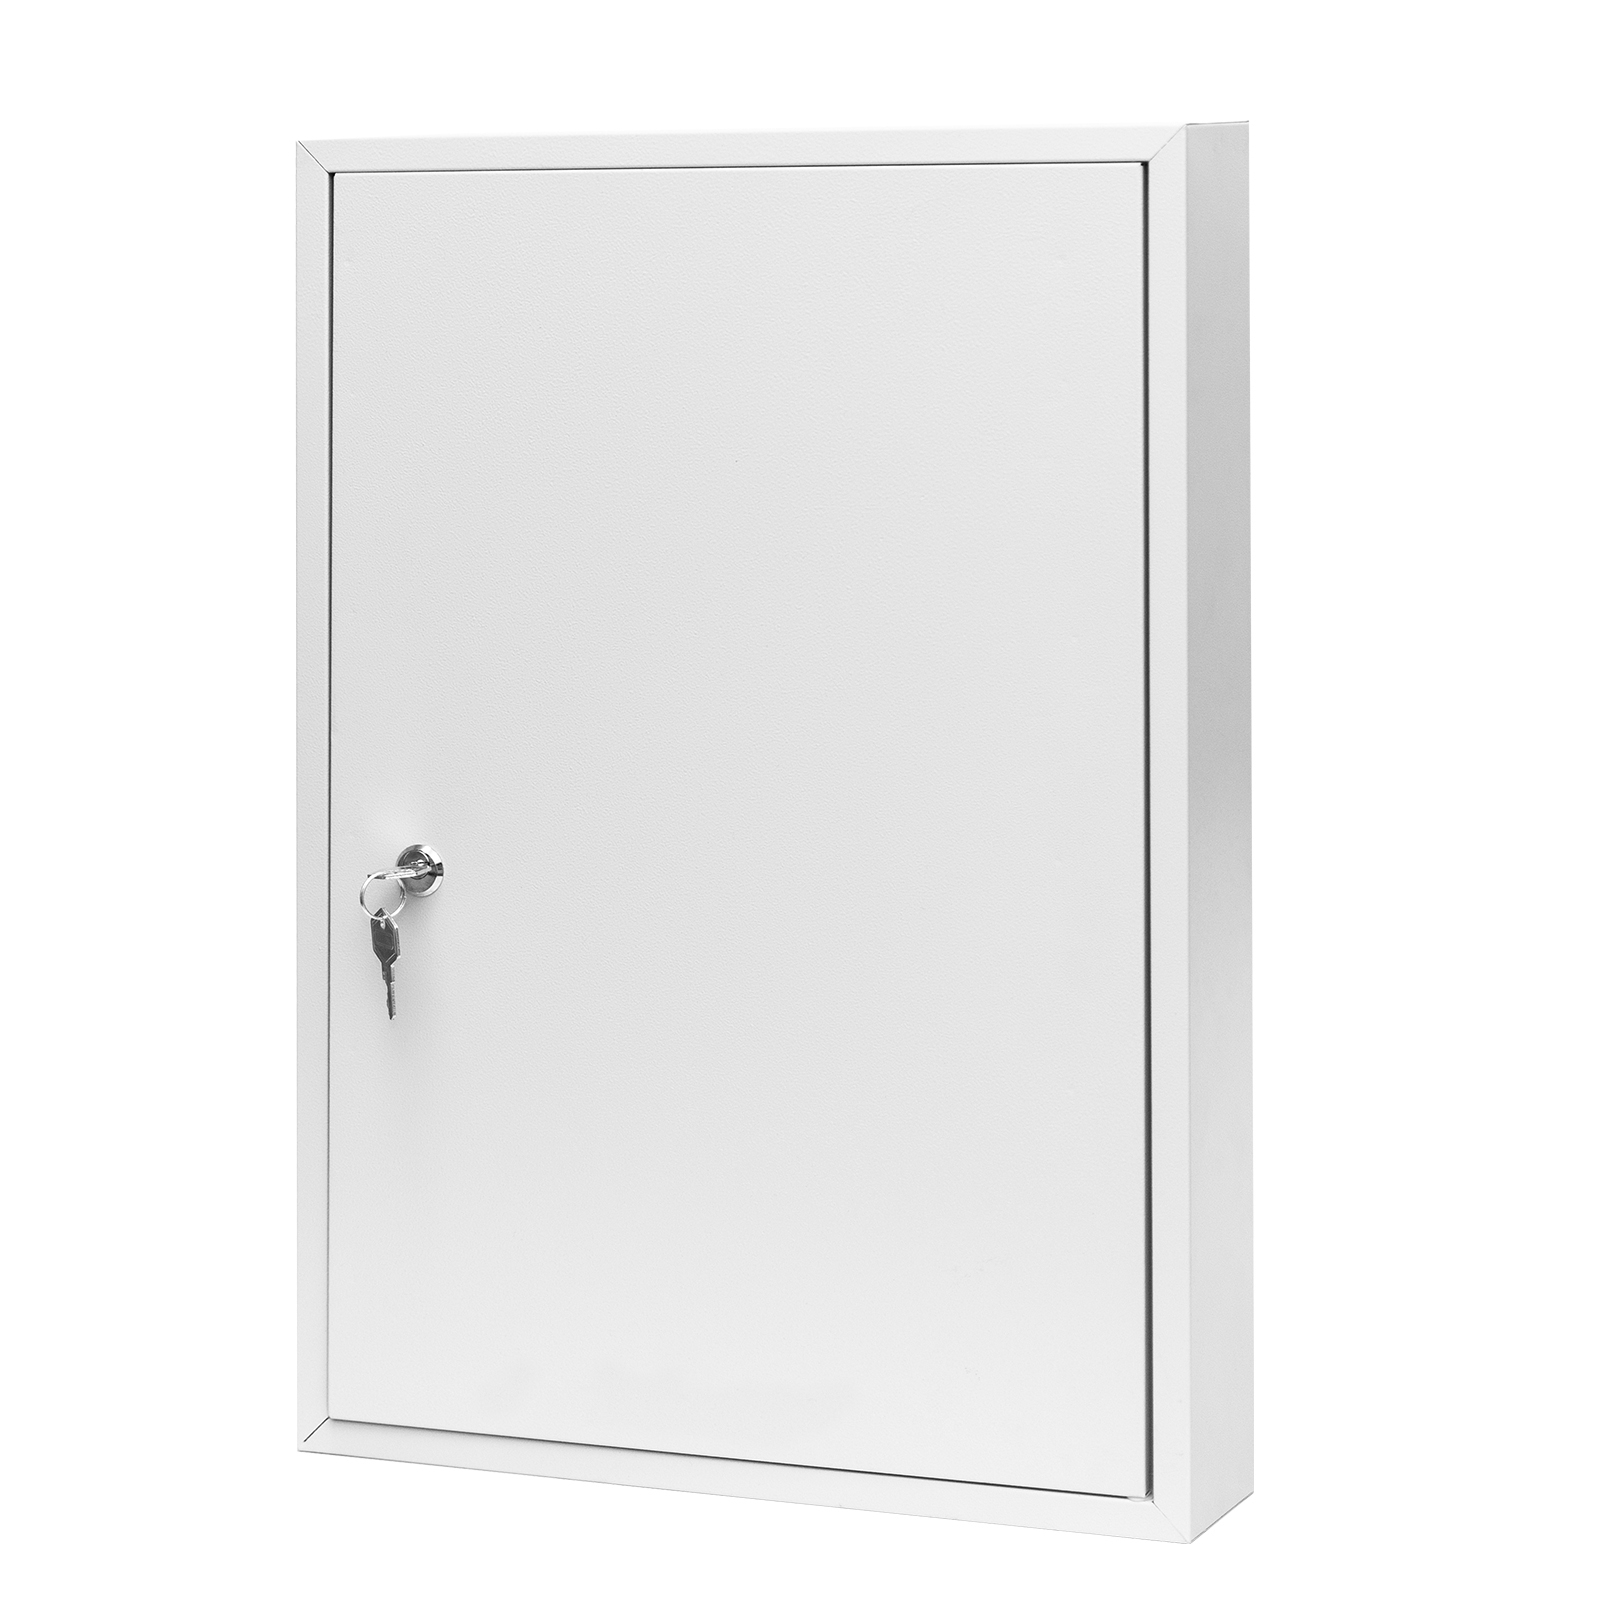 secure key box large metal key box with 200 hooks metal wall mounted key box Key cabinet with lock key cabinet